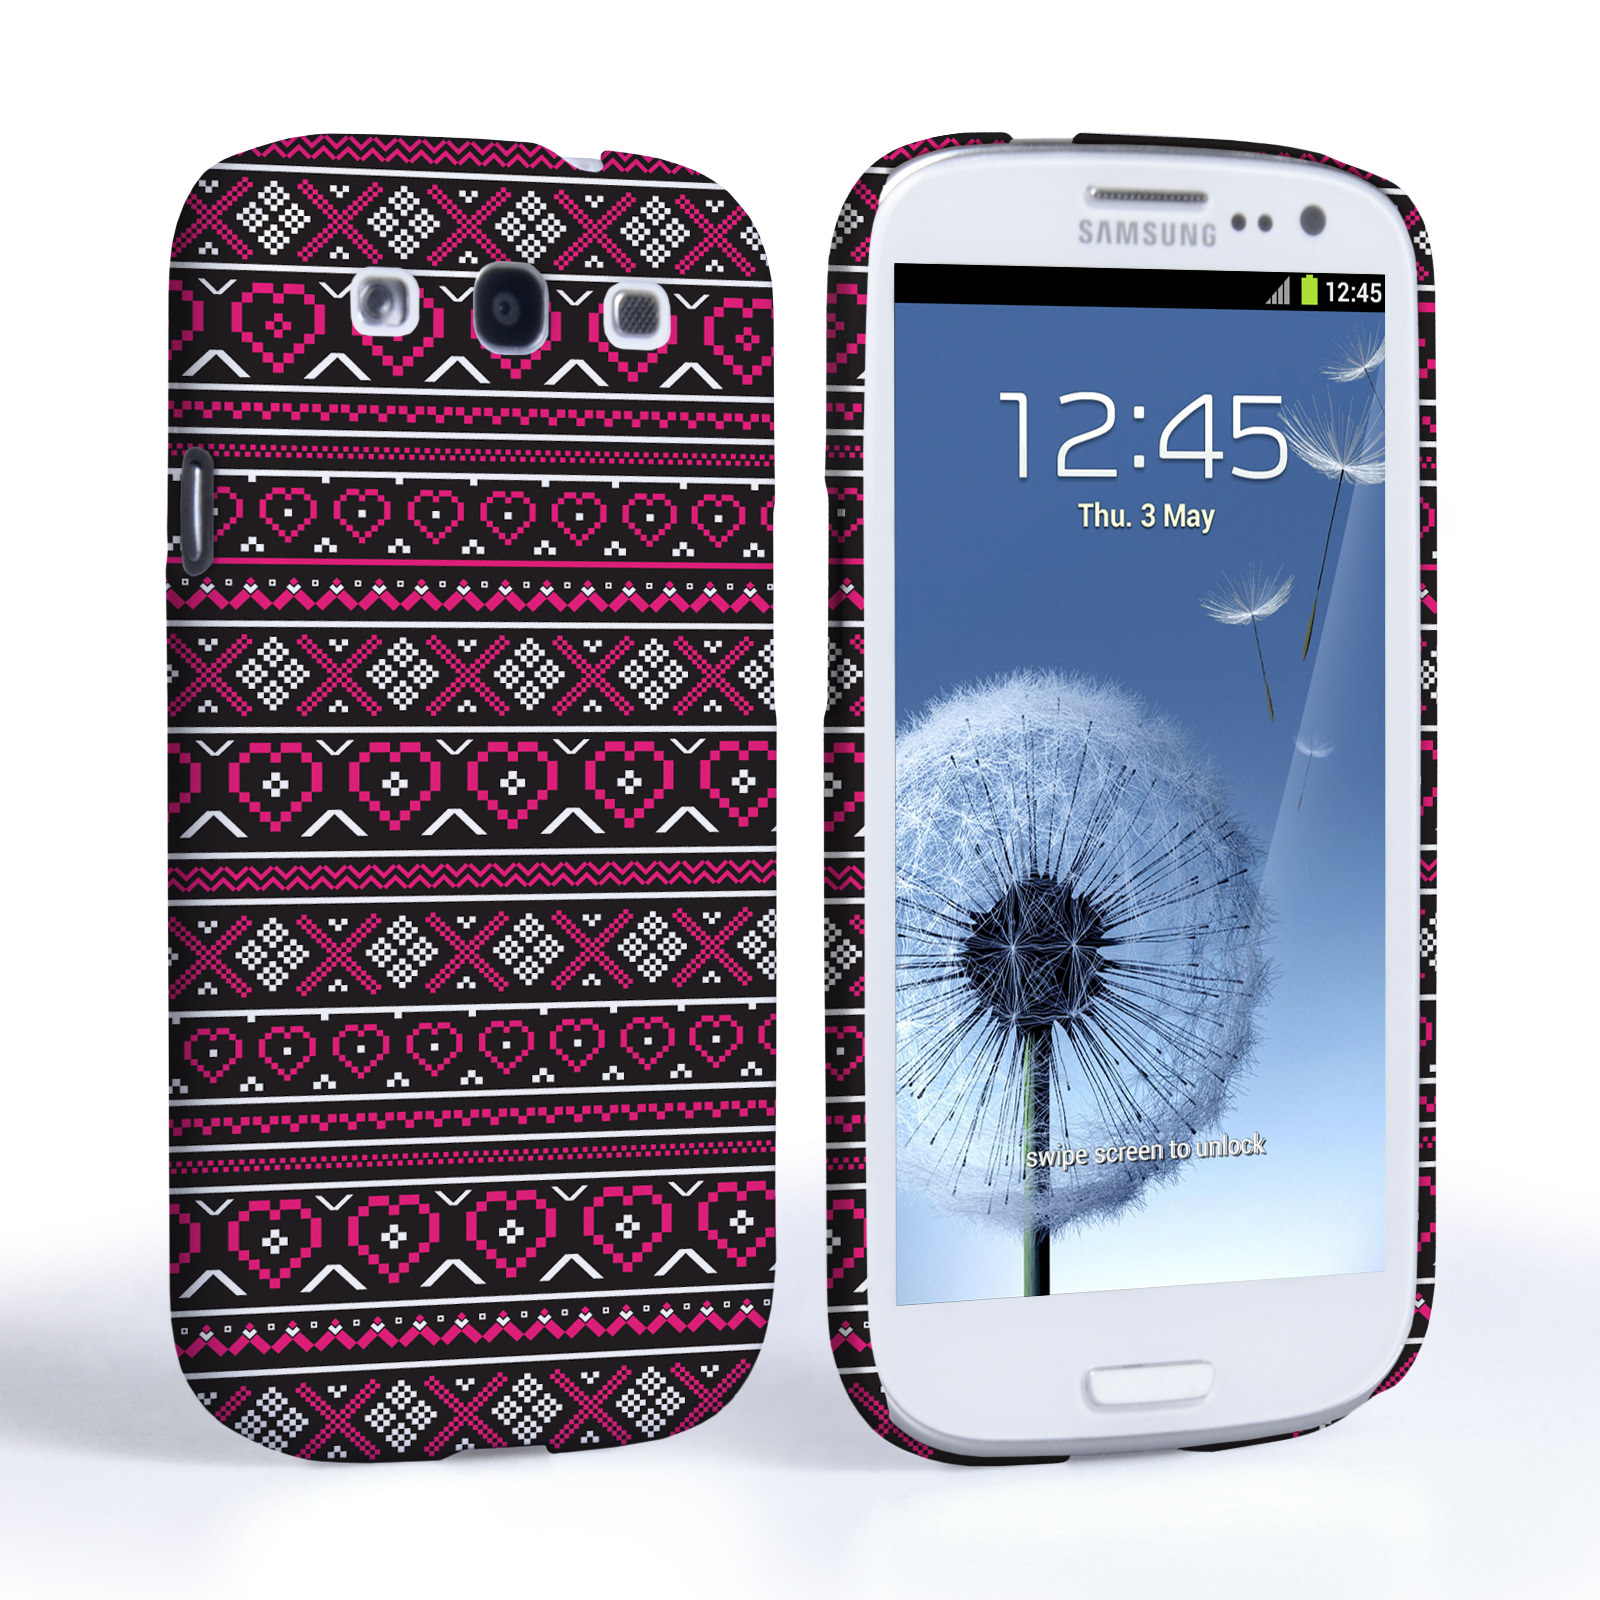 Caseflex Samsung Galaxy S3 Fairisle Case – Pink and Black